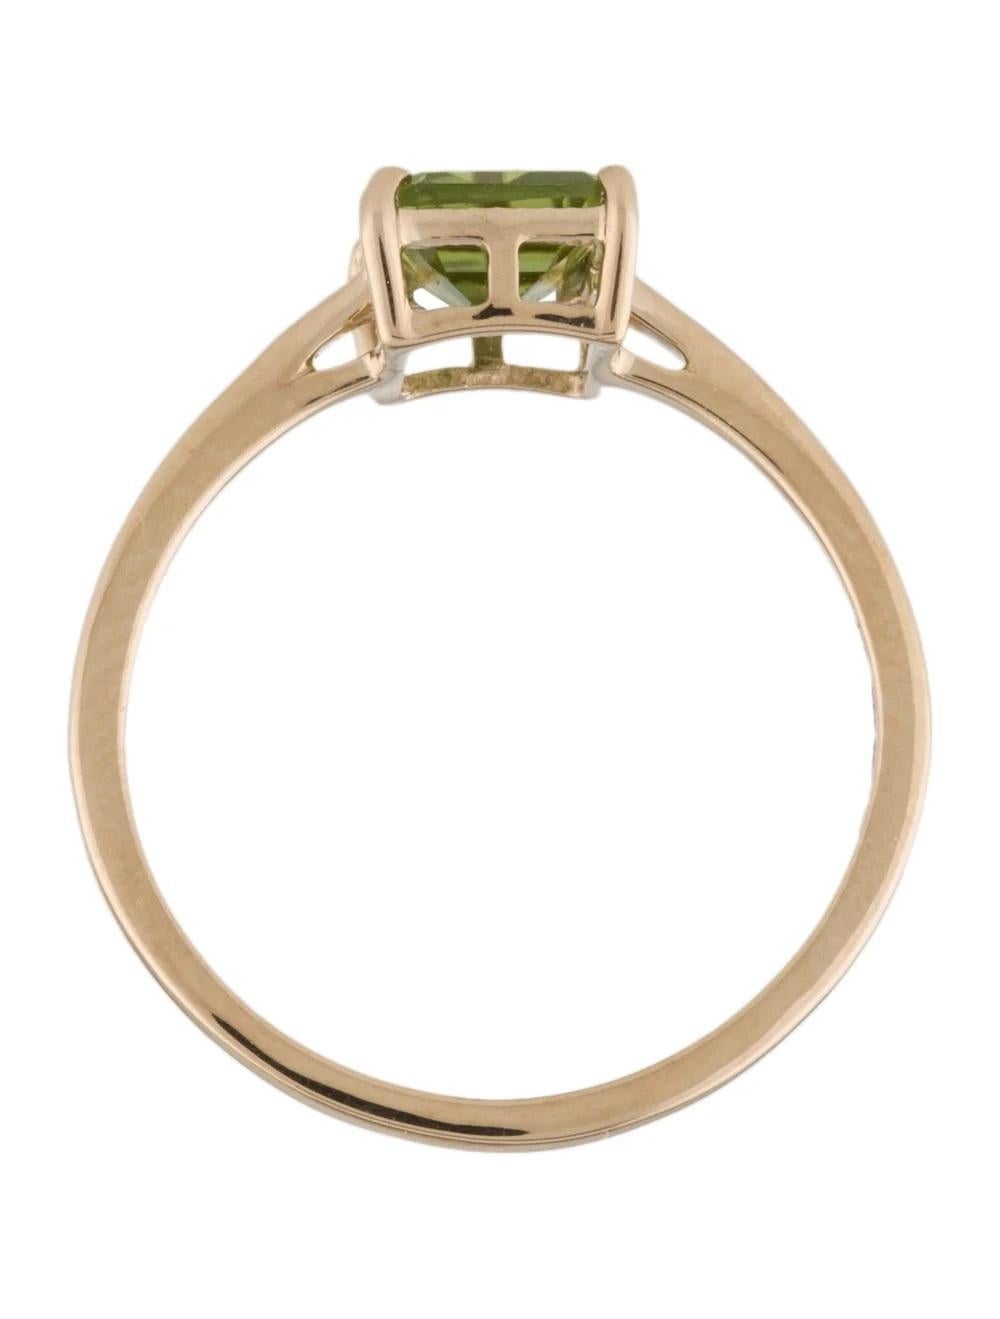 Women's 14K 1.50ct Peridot Cocktail Ring, Size 6.75 - Green Gemstone, Elegant Design For Sale